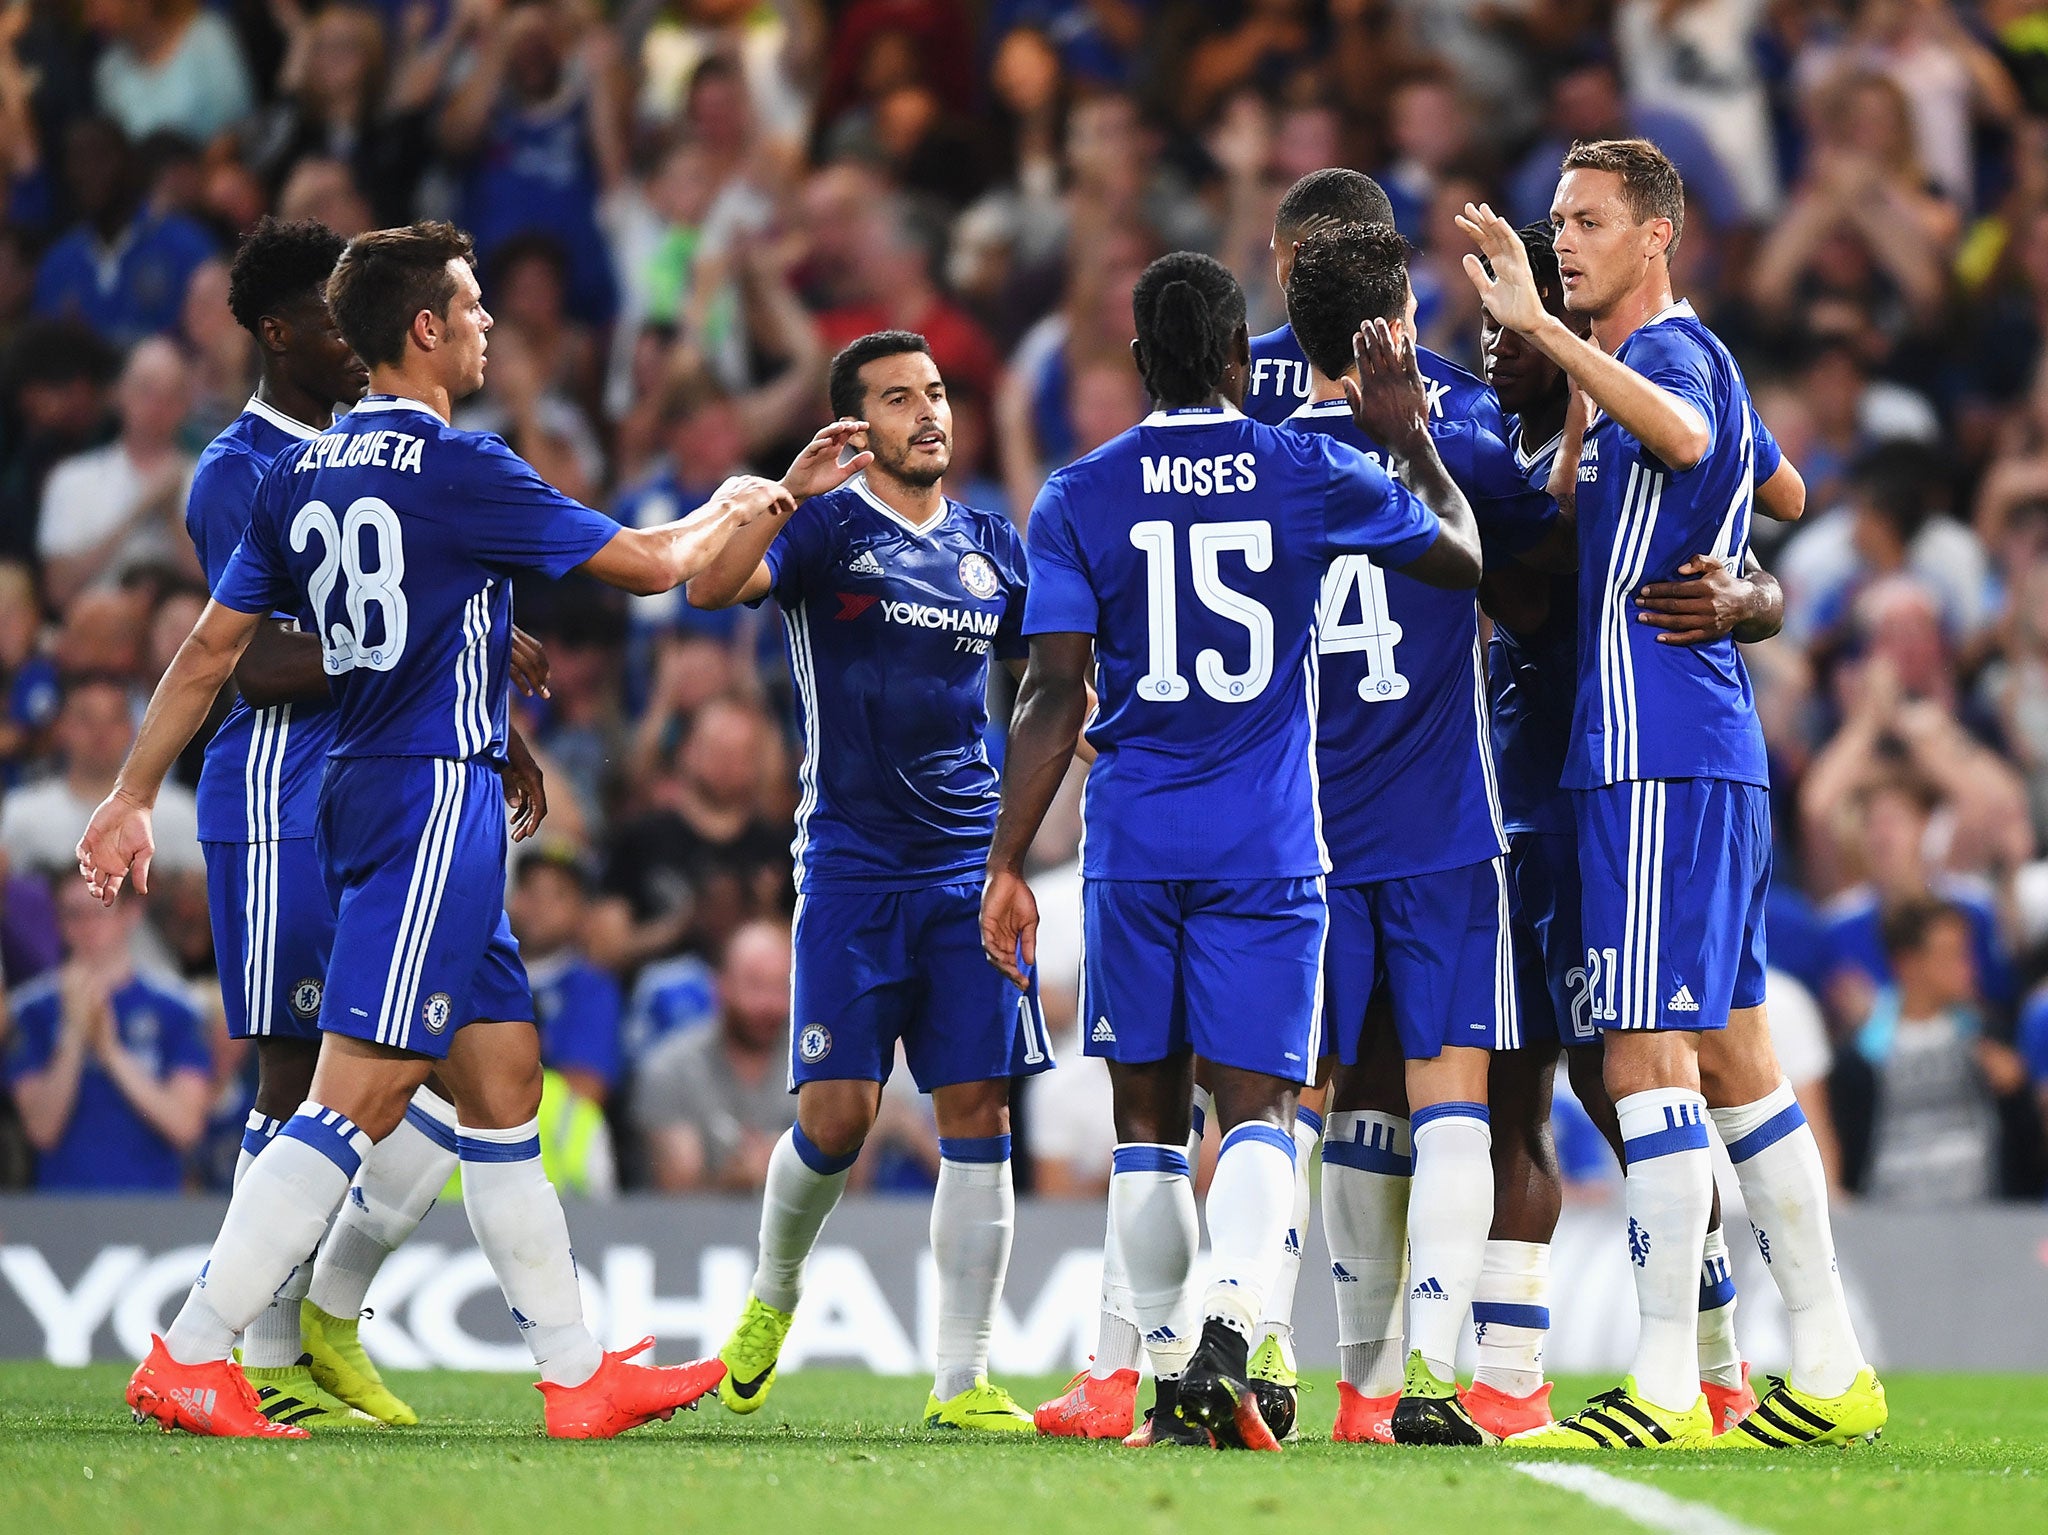 Chelsea remain unbeaten this season so far